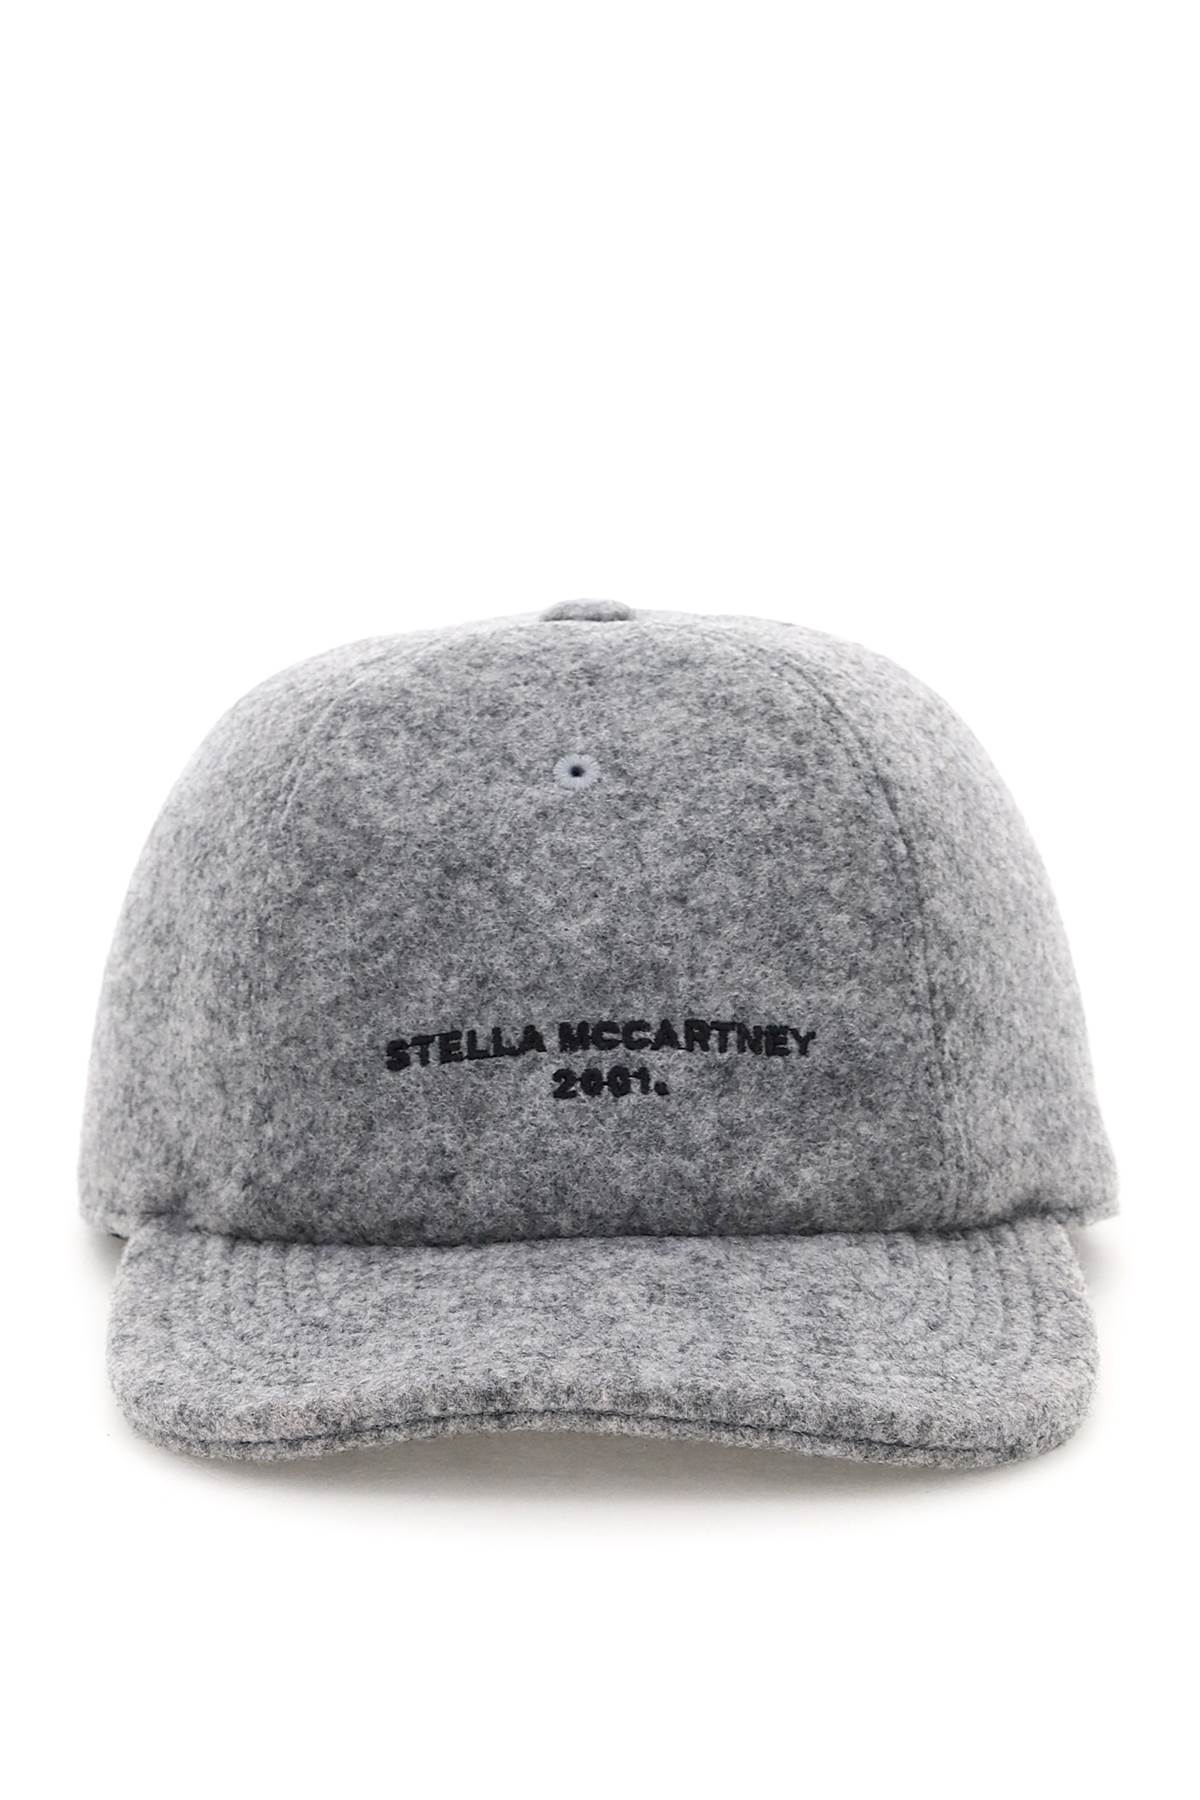 STELLA MCCARTNEY ECO FELT LOGO BASEBALL CAP